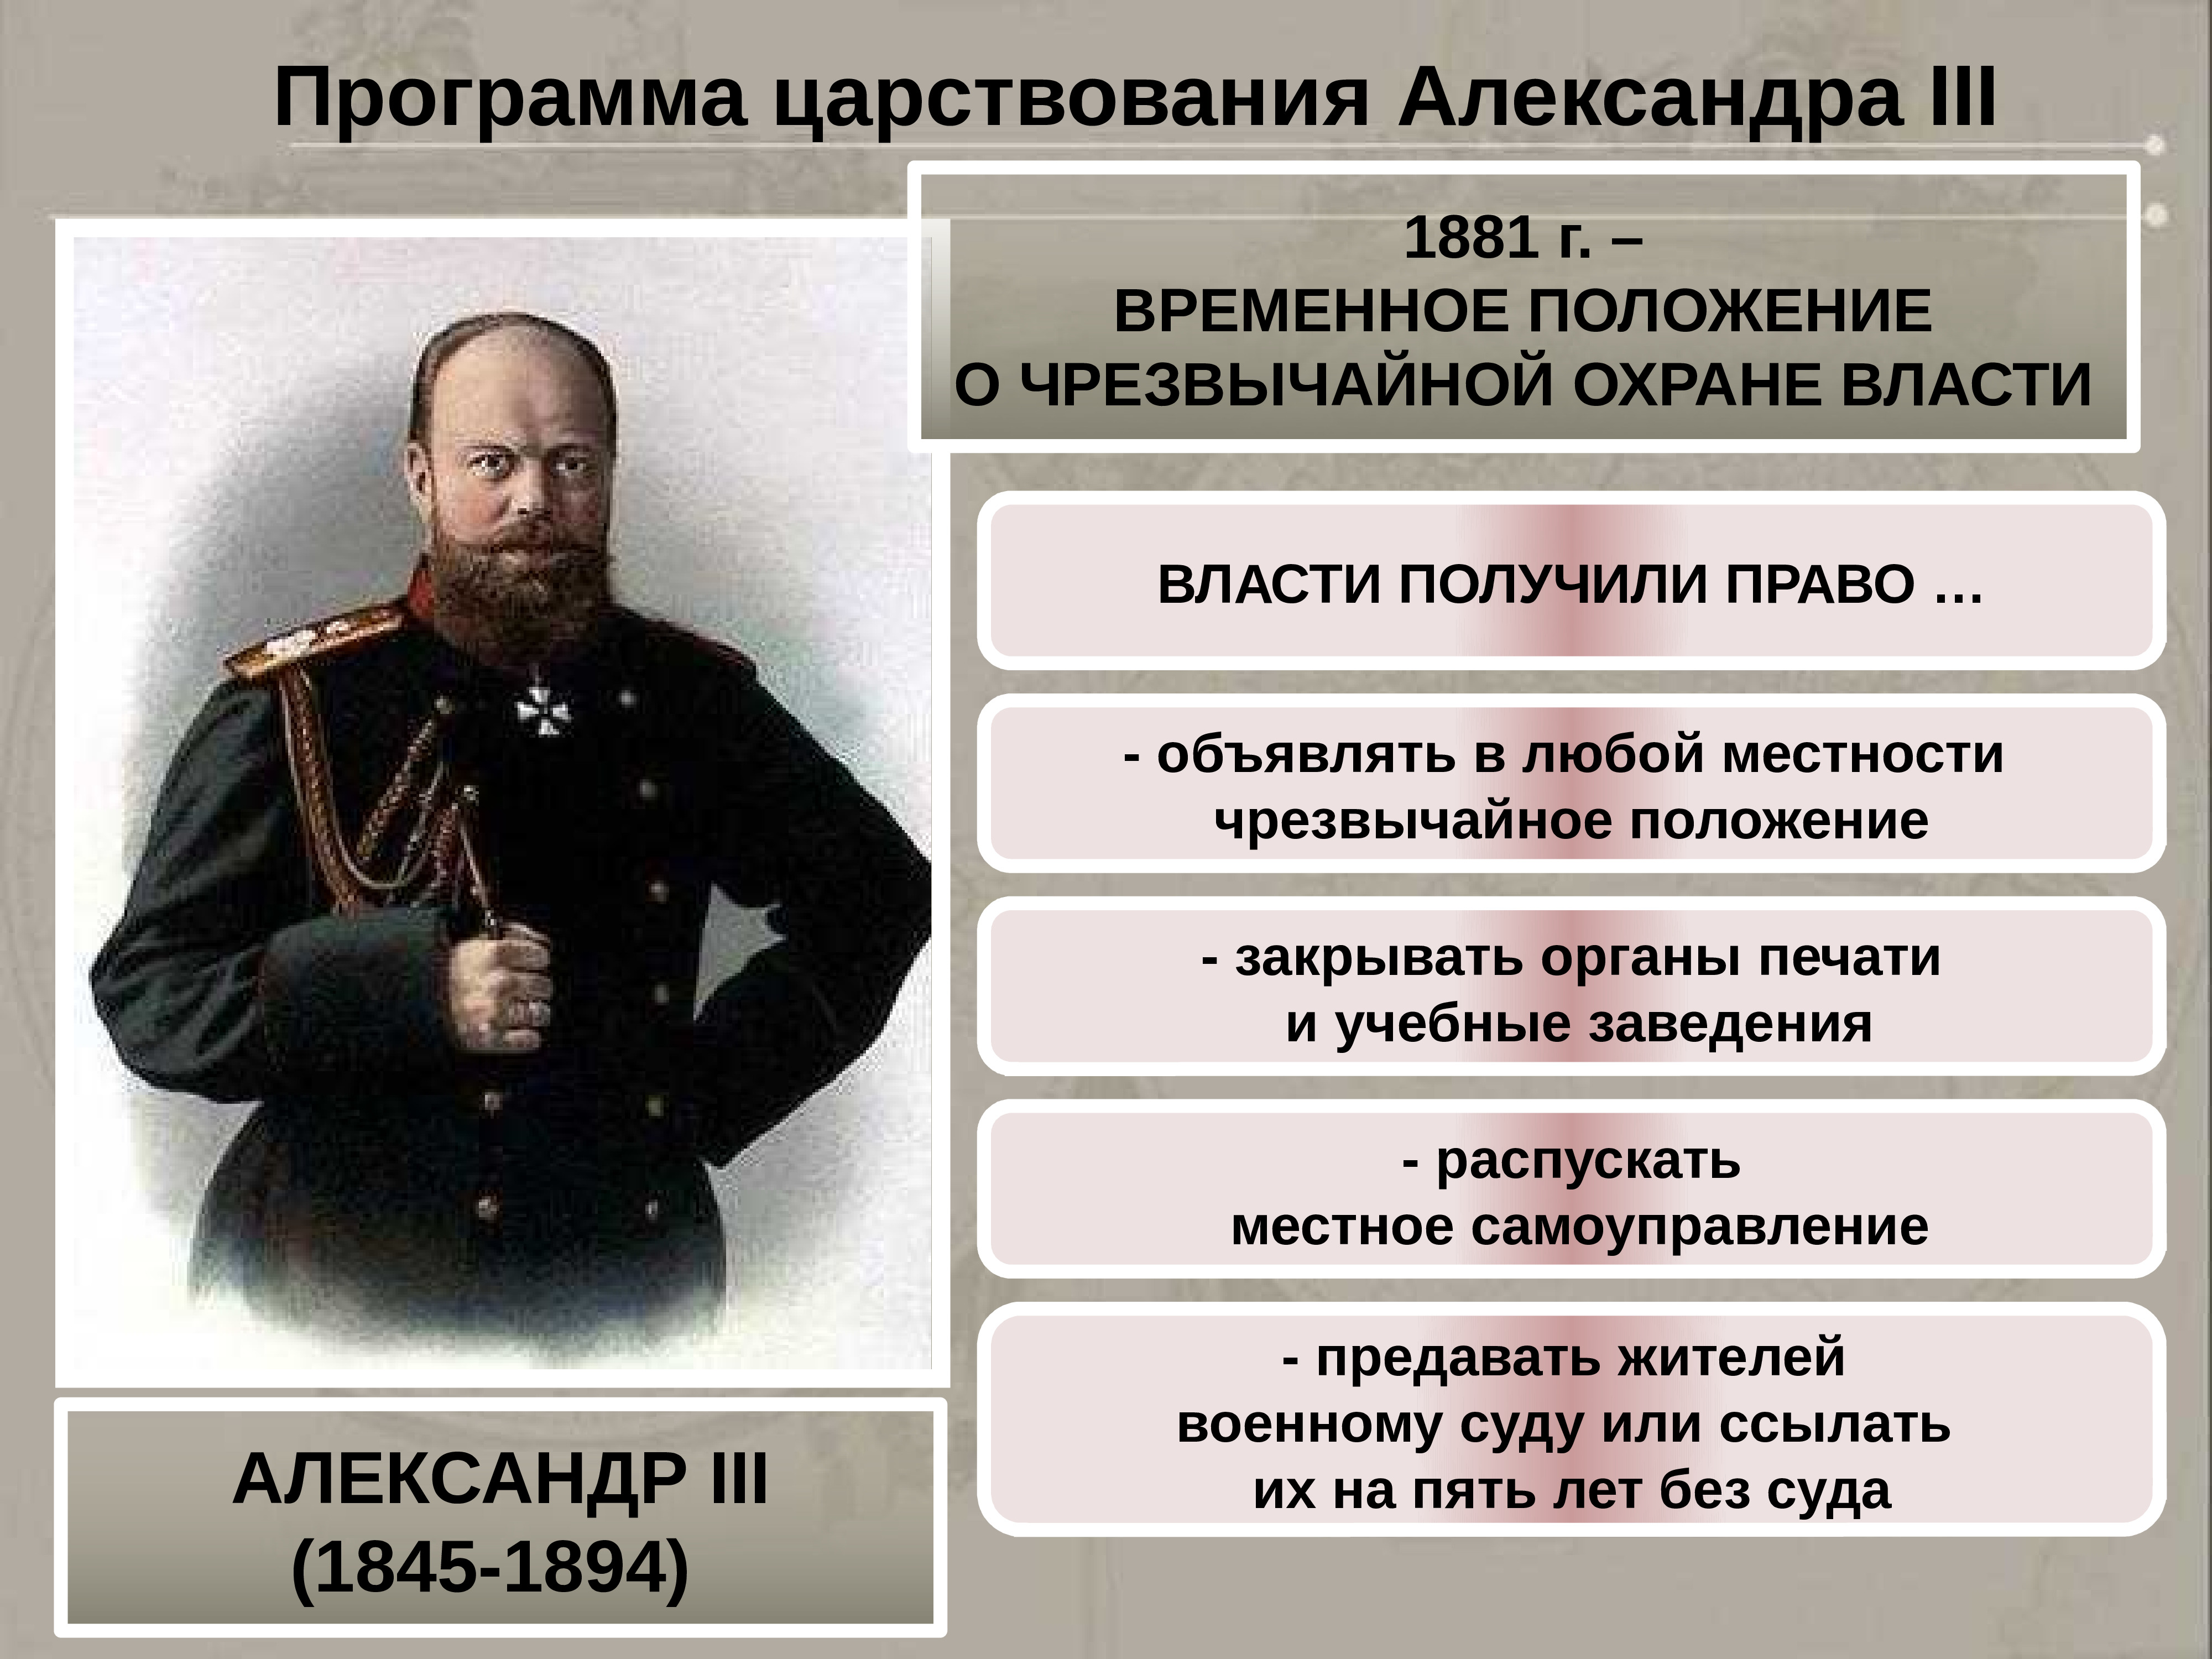 1880 при александре 3. Россия при Александре 3.